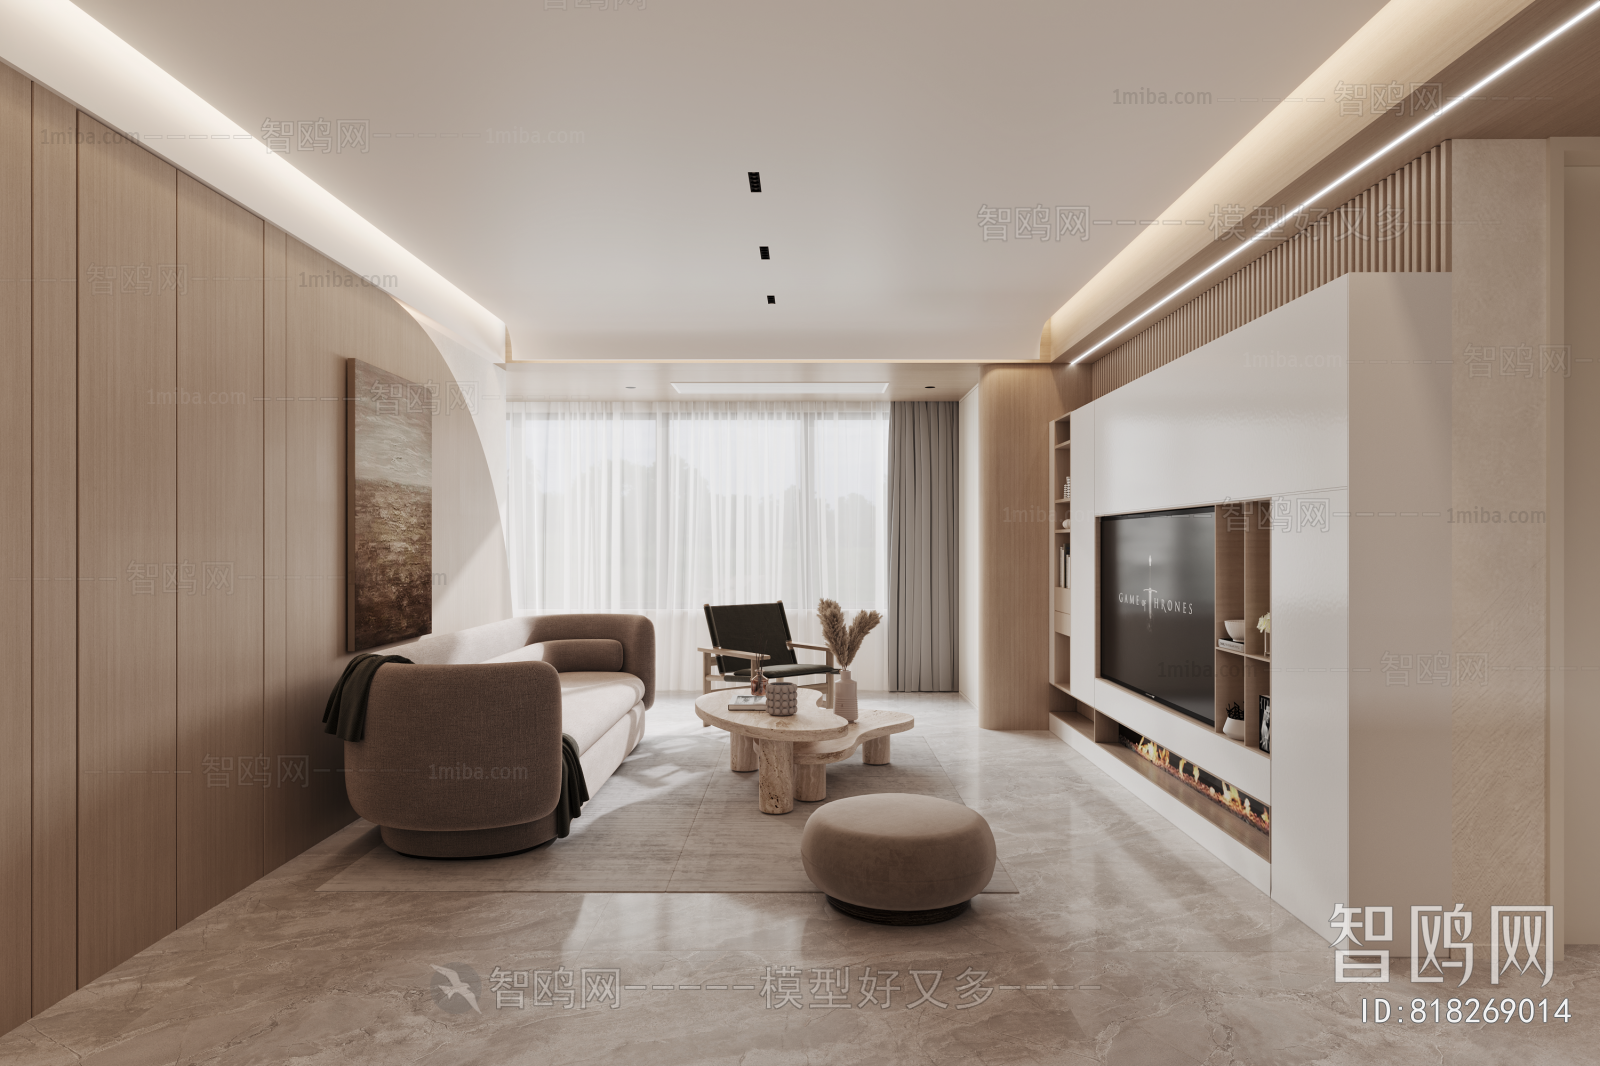 Wabi-sabi Style A Living Room